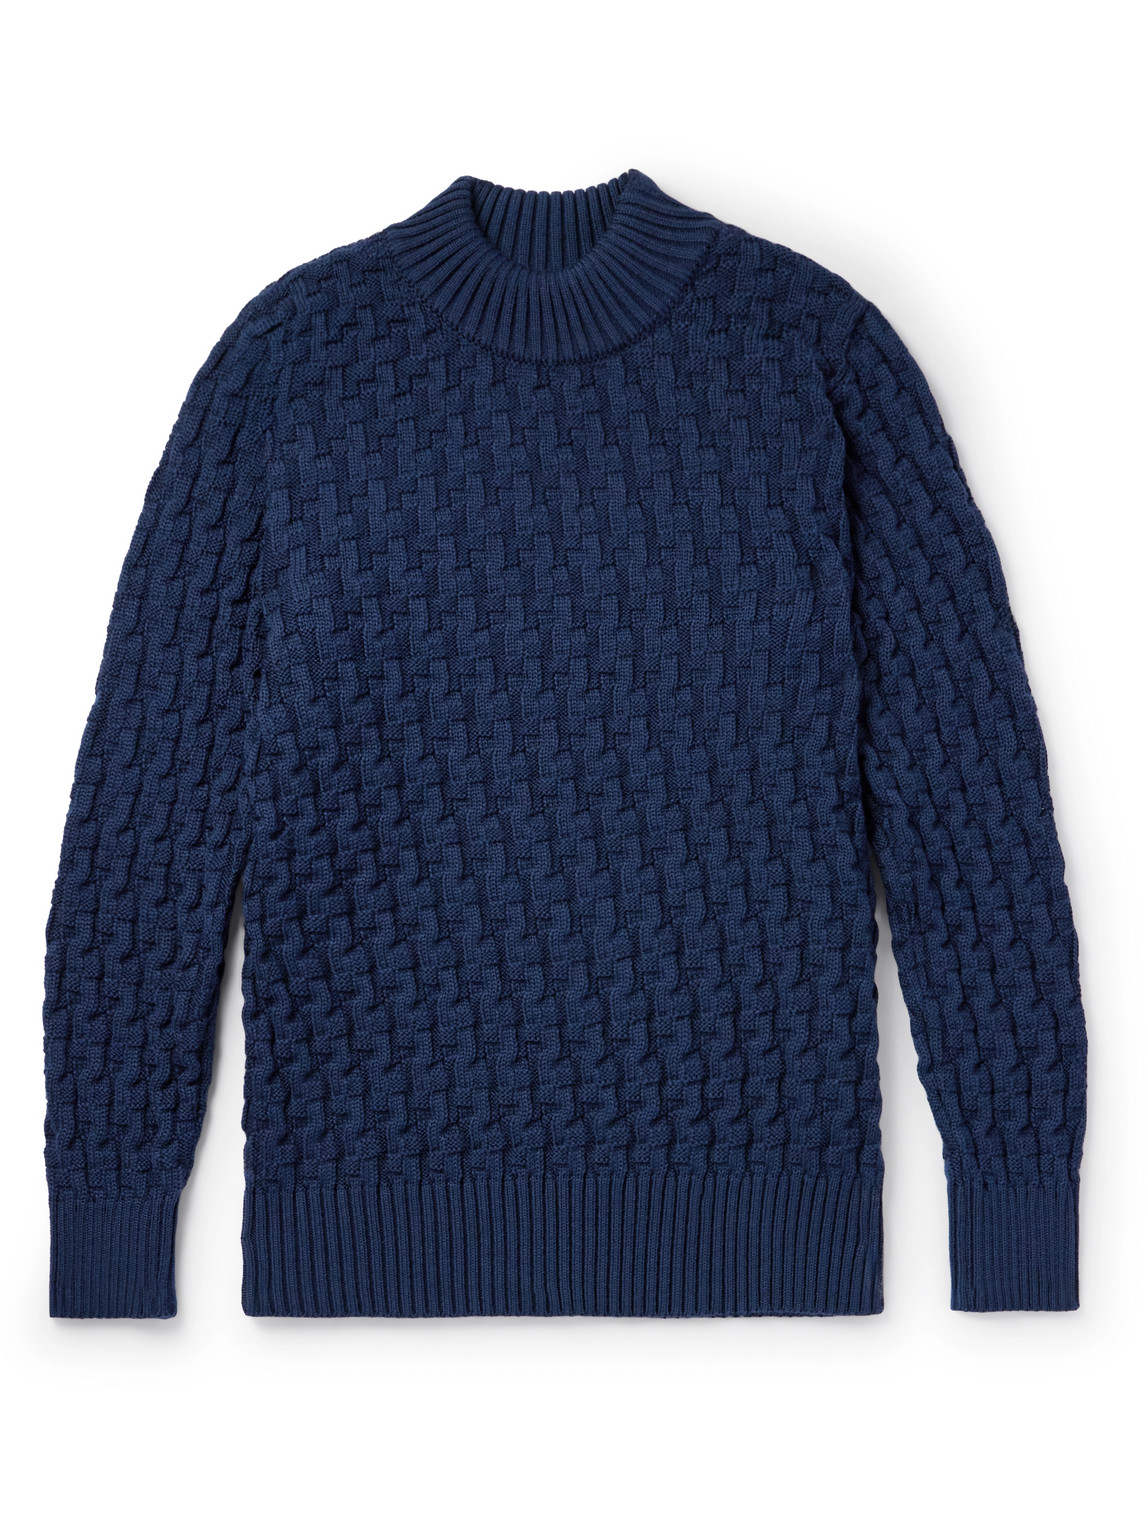 Stark Cable-Knit Merino Wool Sweater